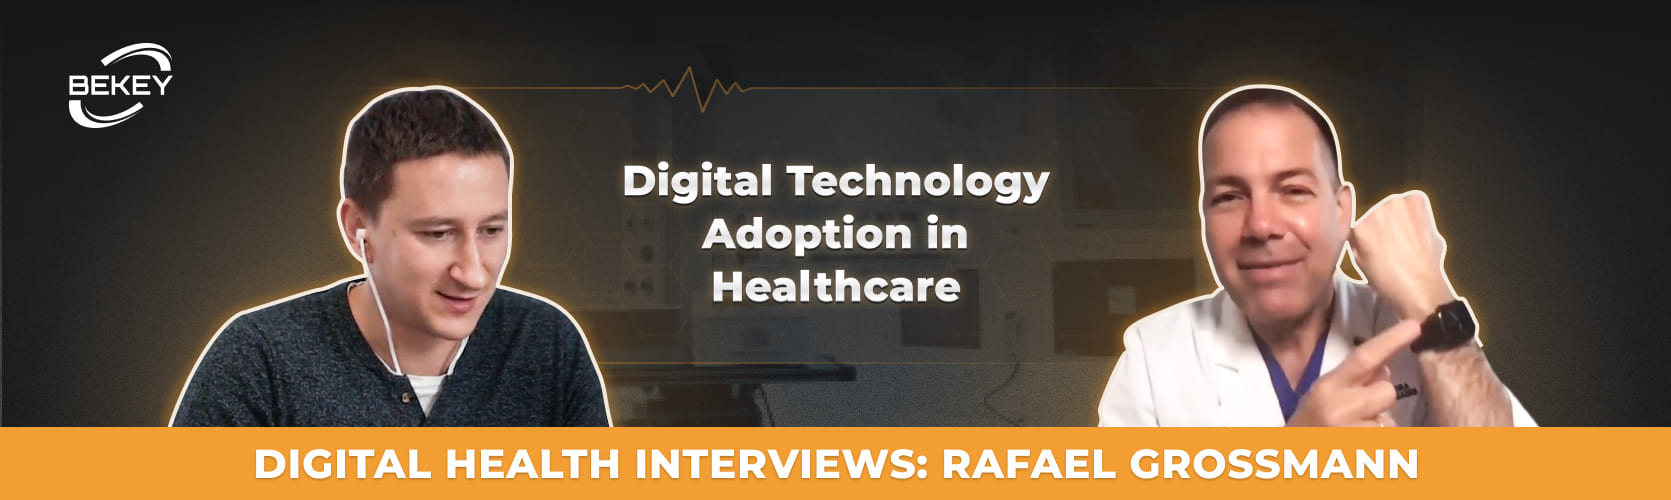 Rafael Grossmann - digital health interview